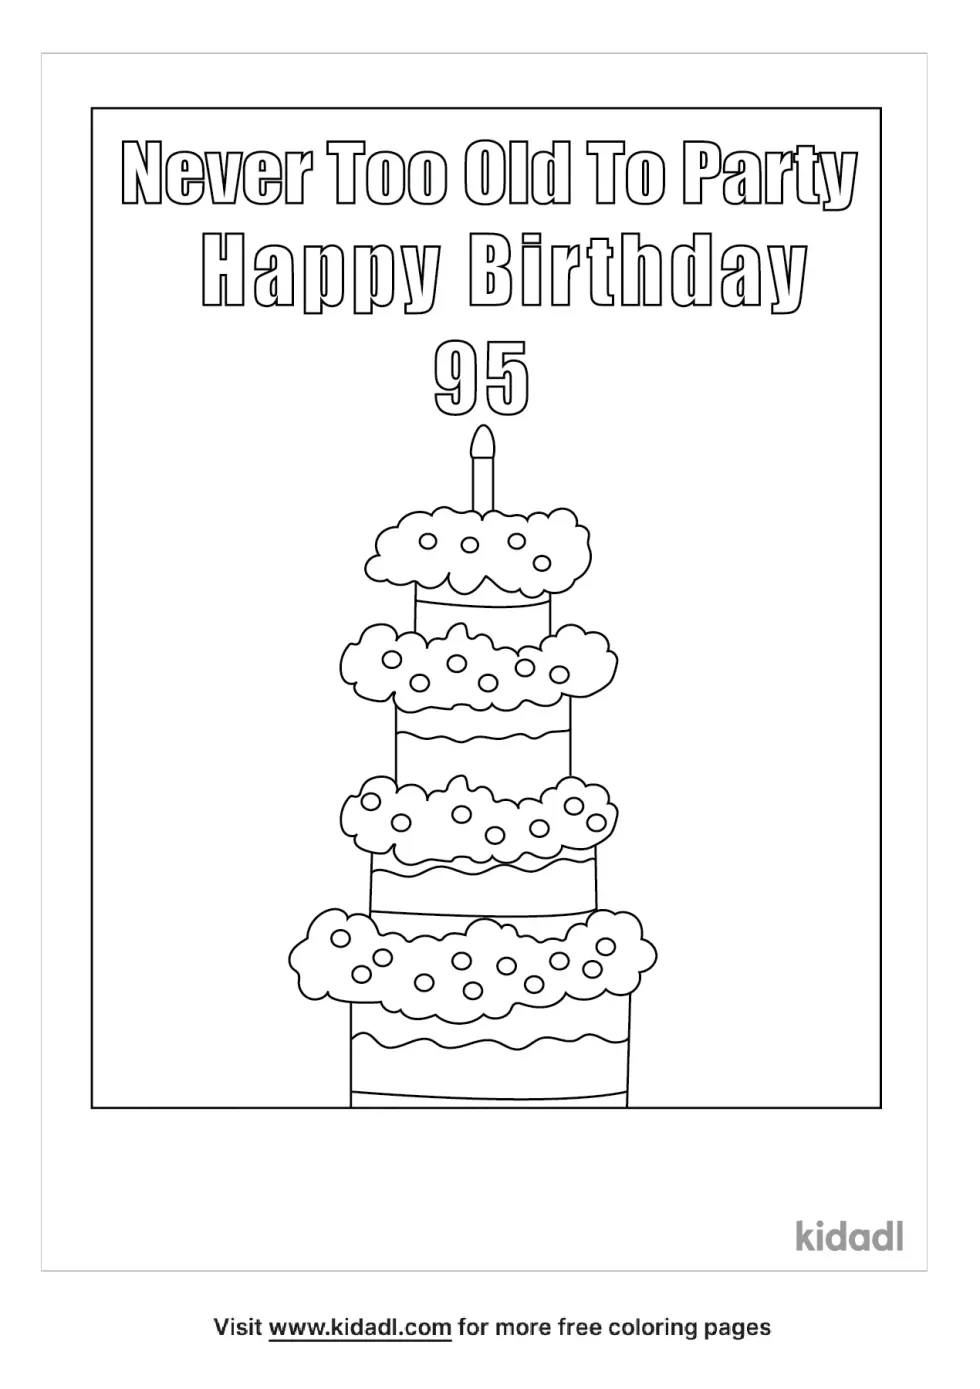 Birthday Card For 95